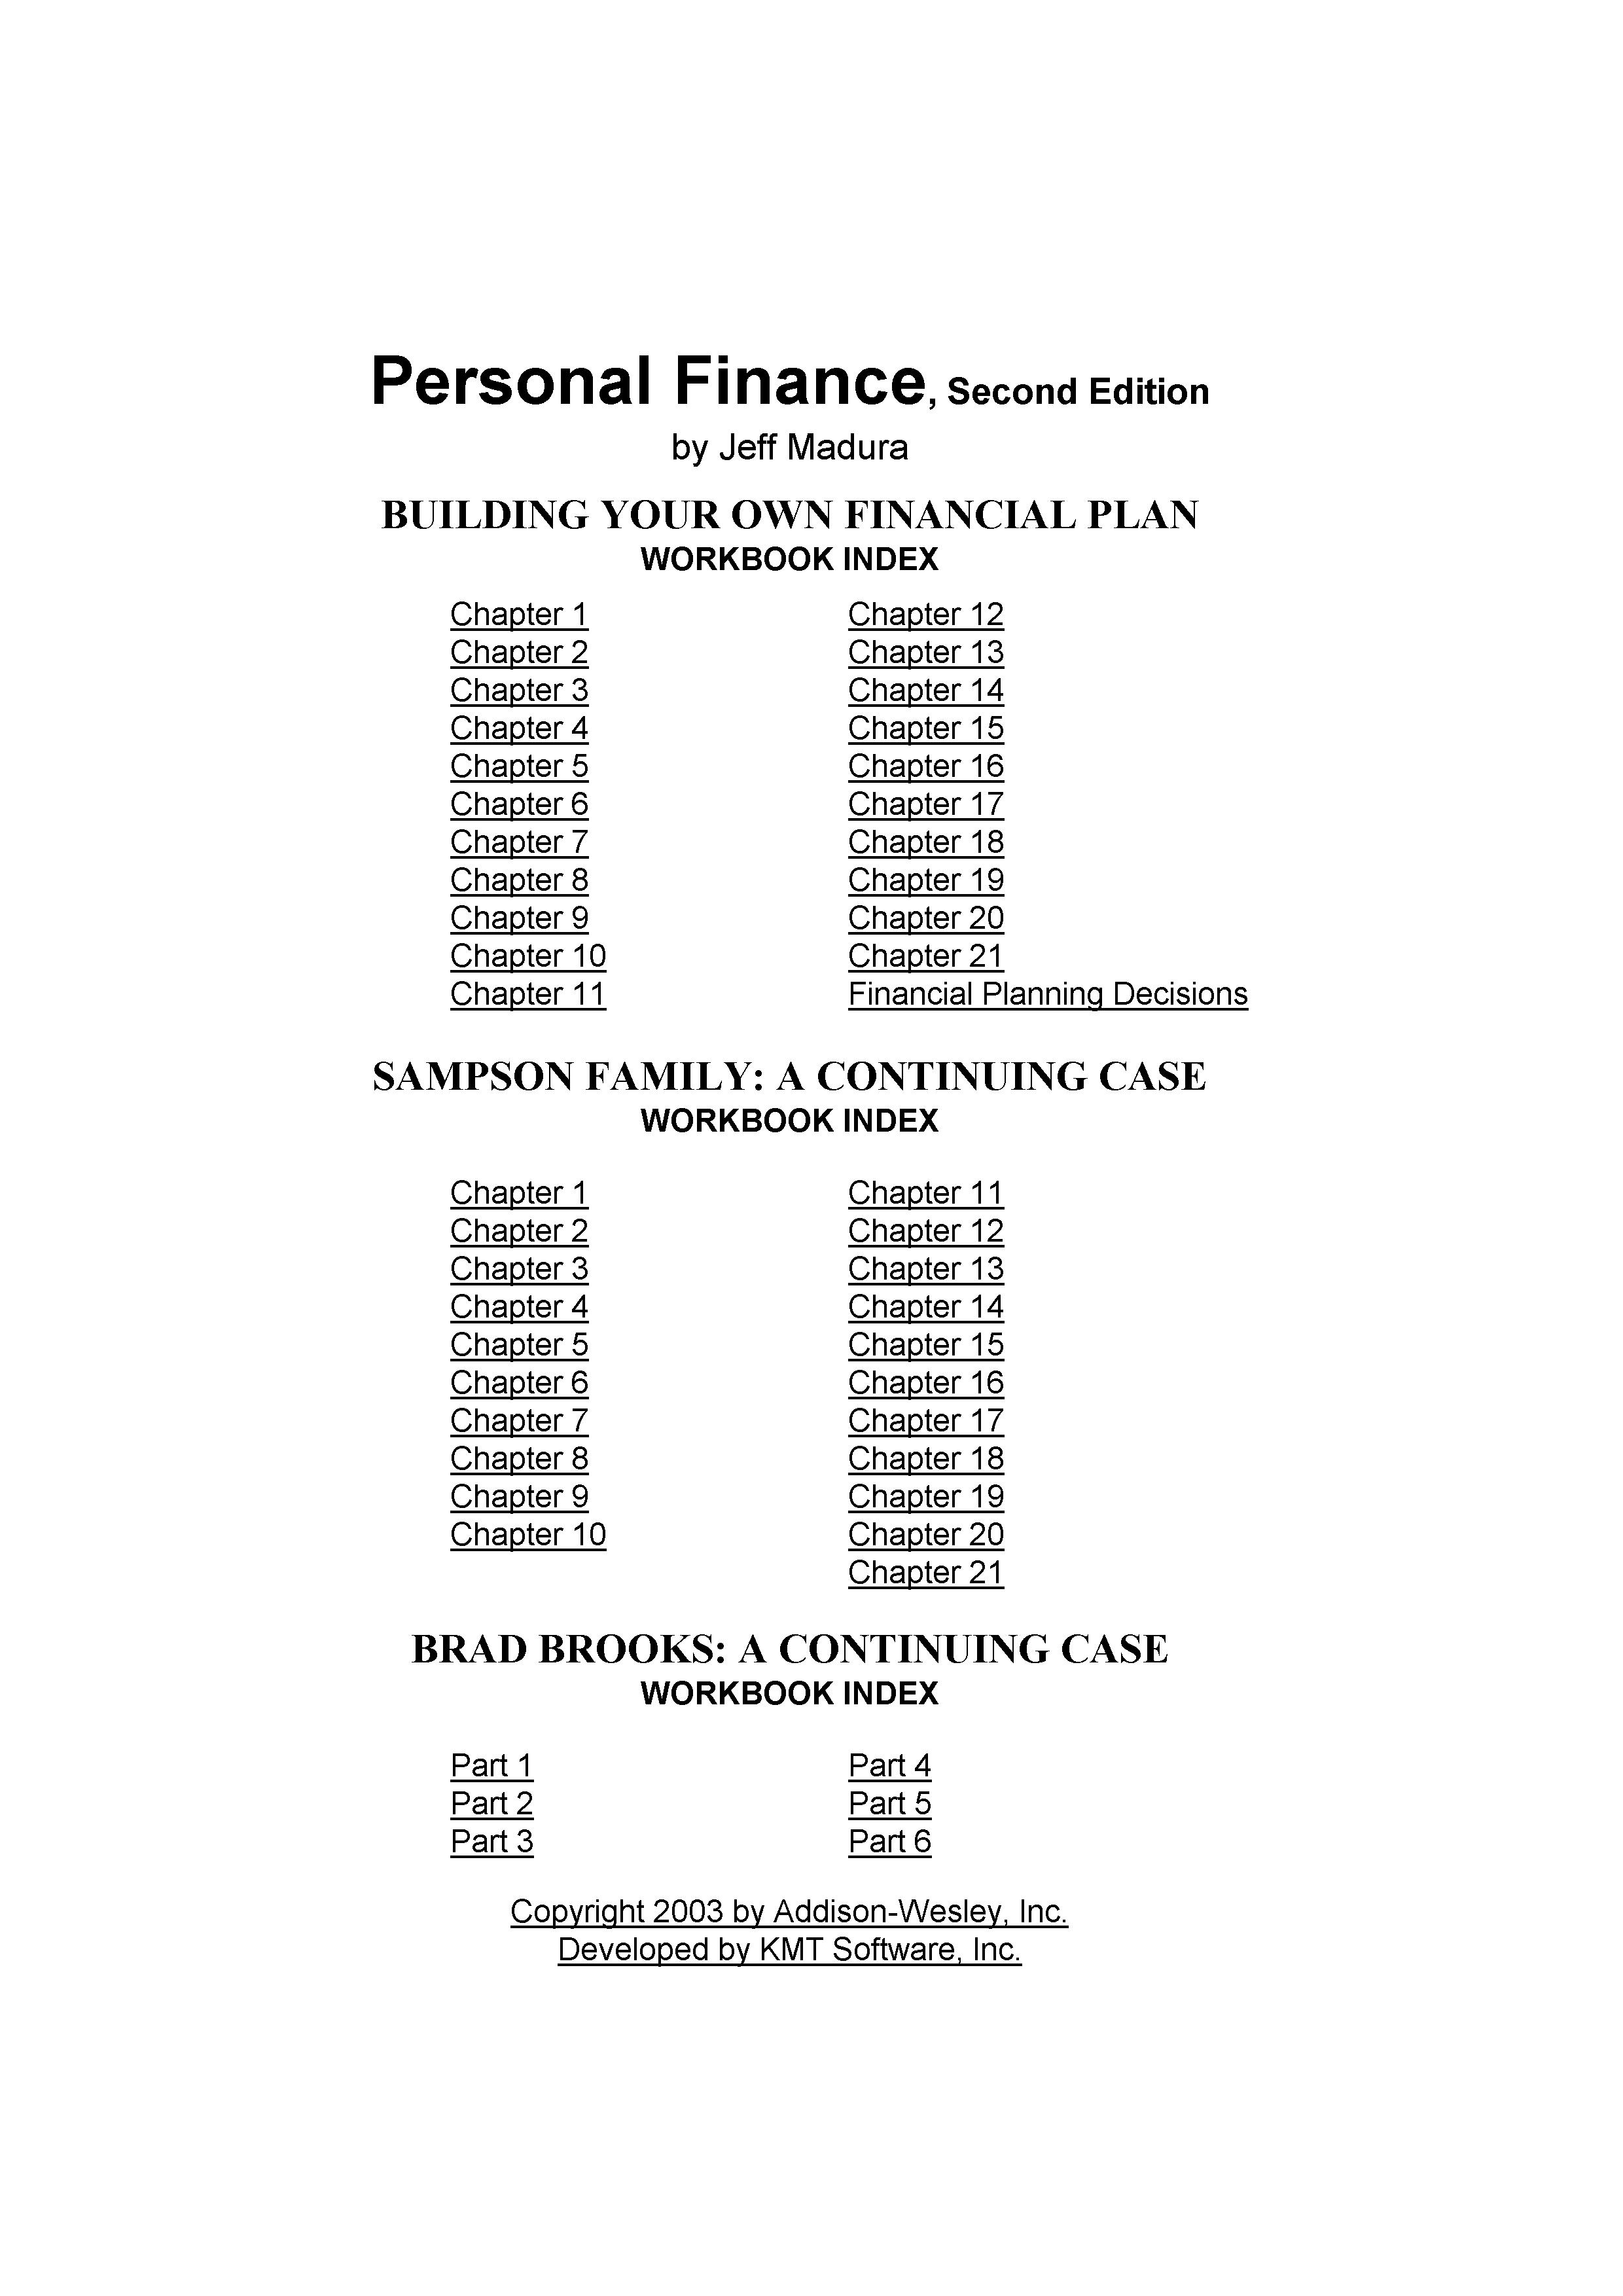 Personal Finance Workbook 2e.JPG